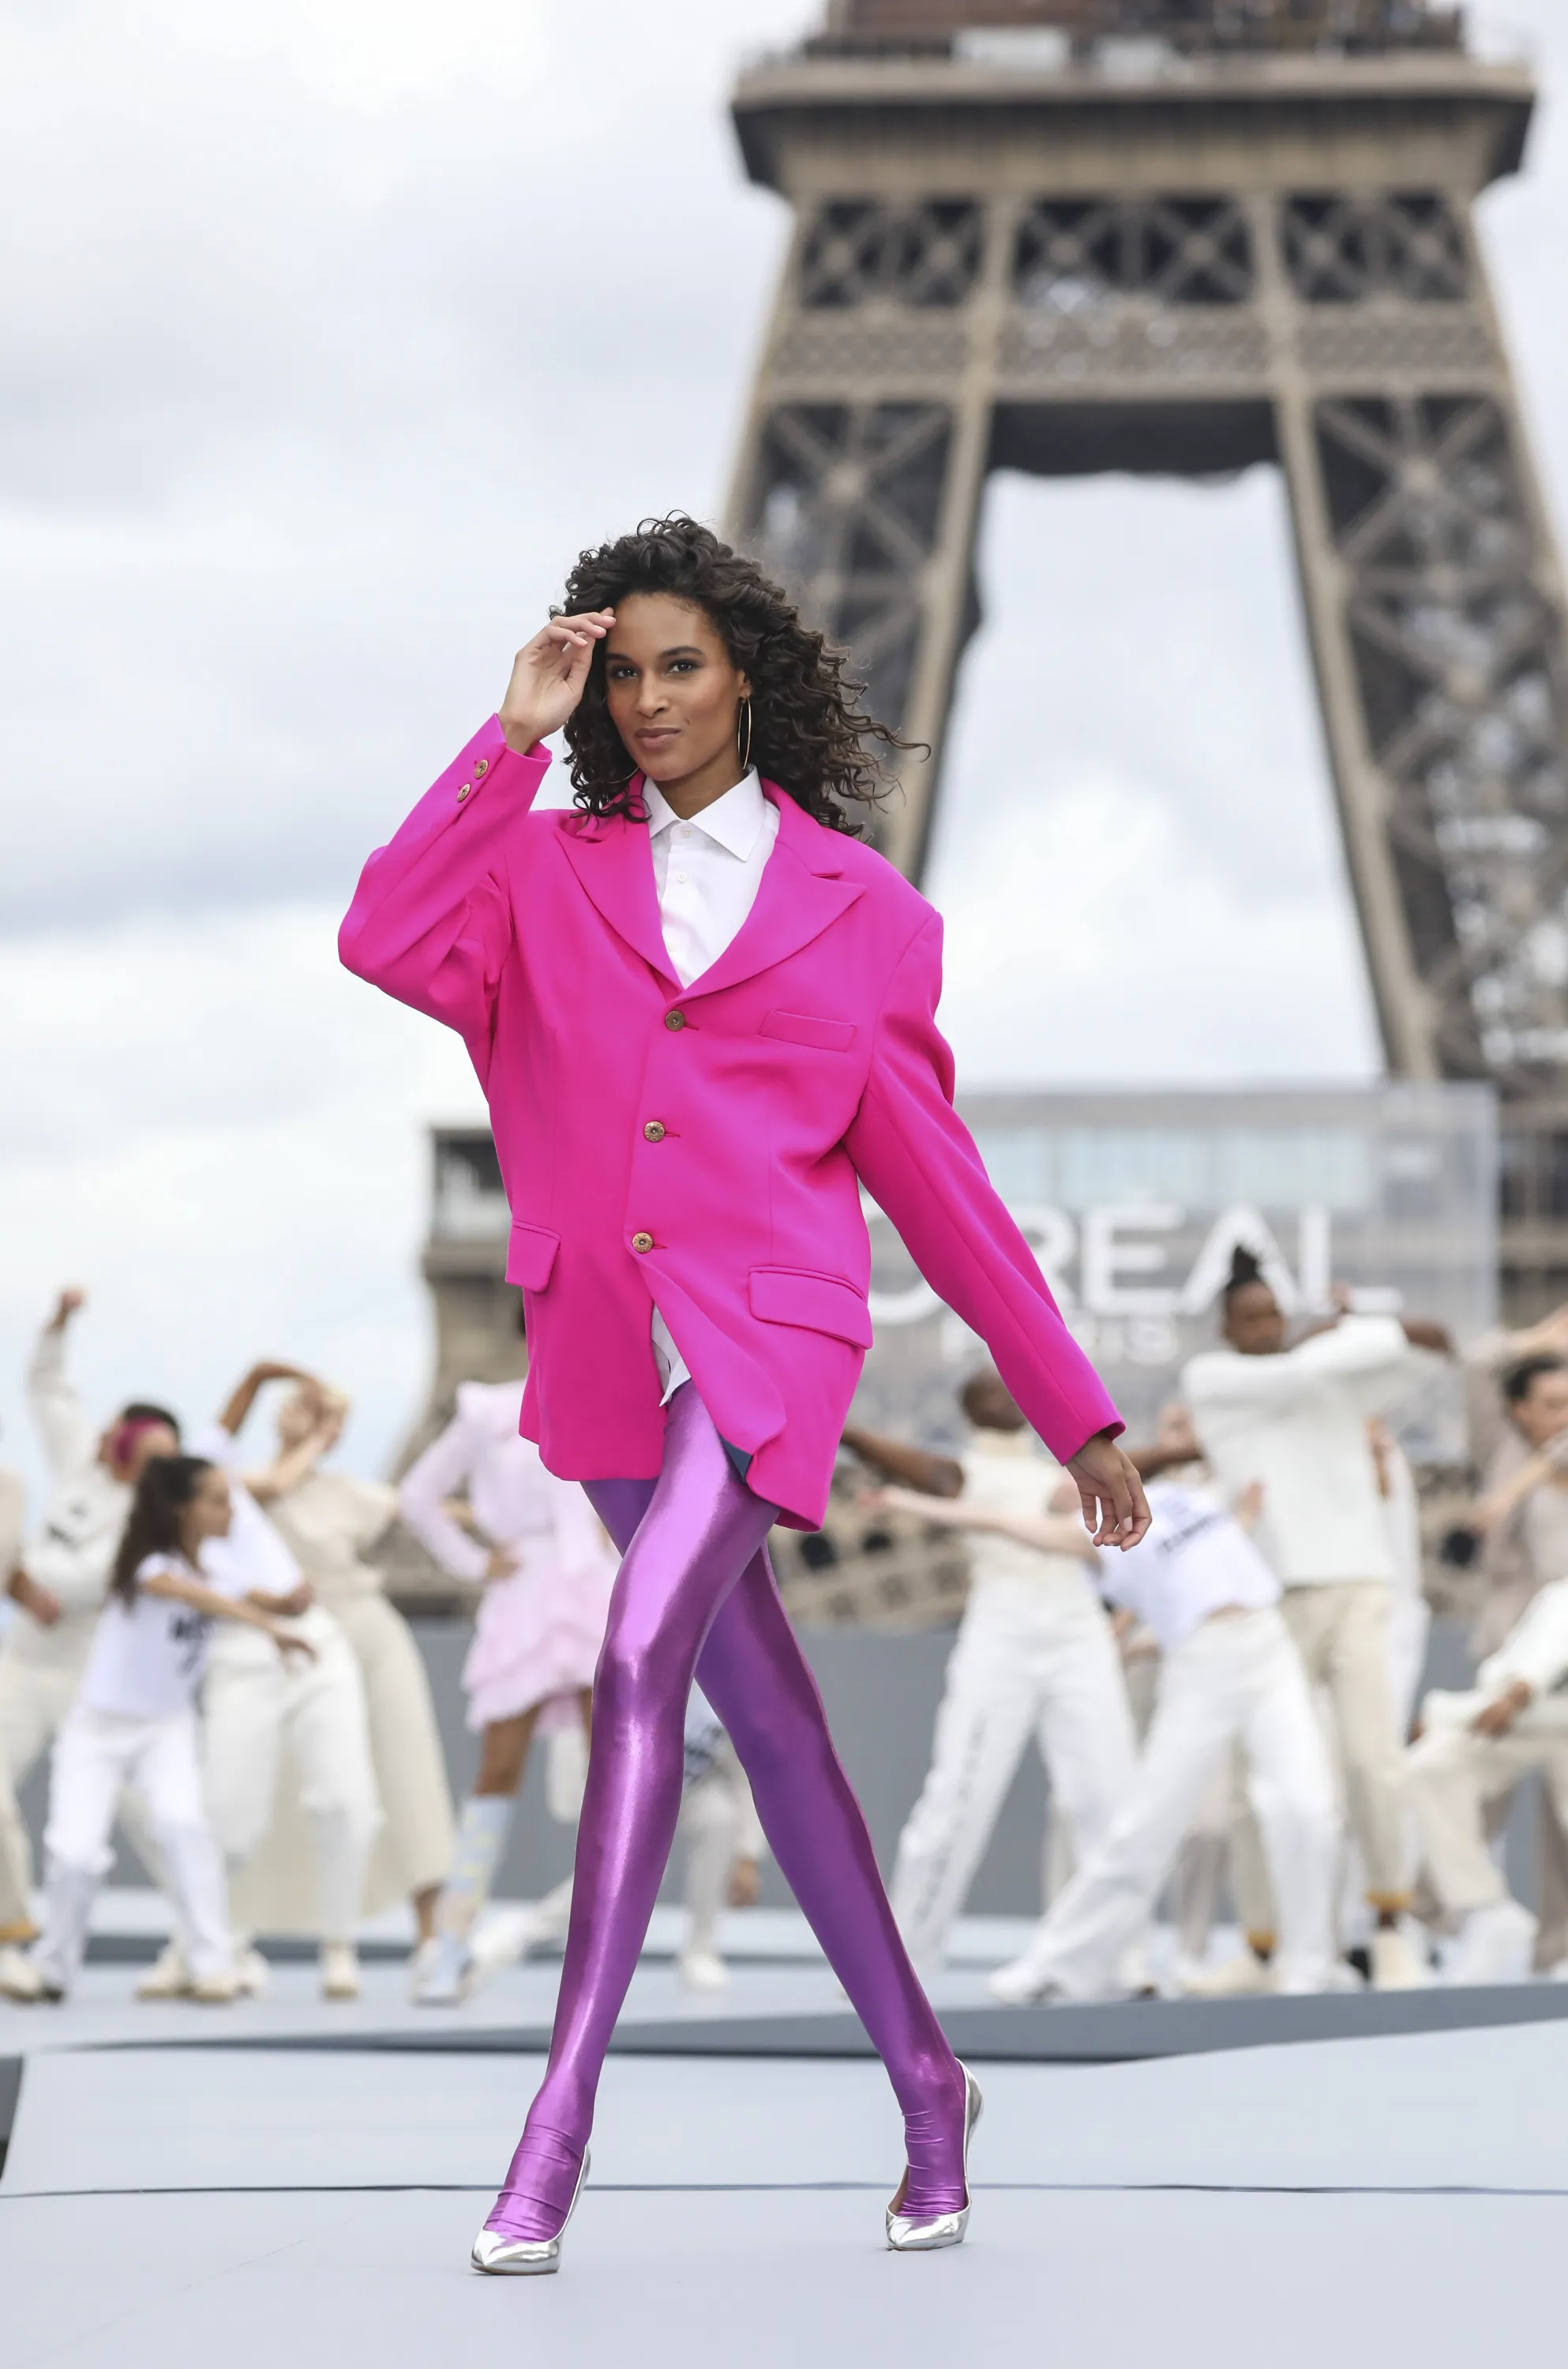 Показ мод в Париже 2022 год